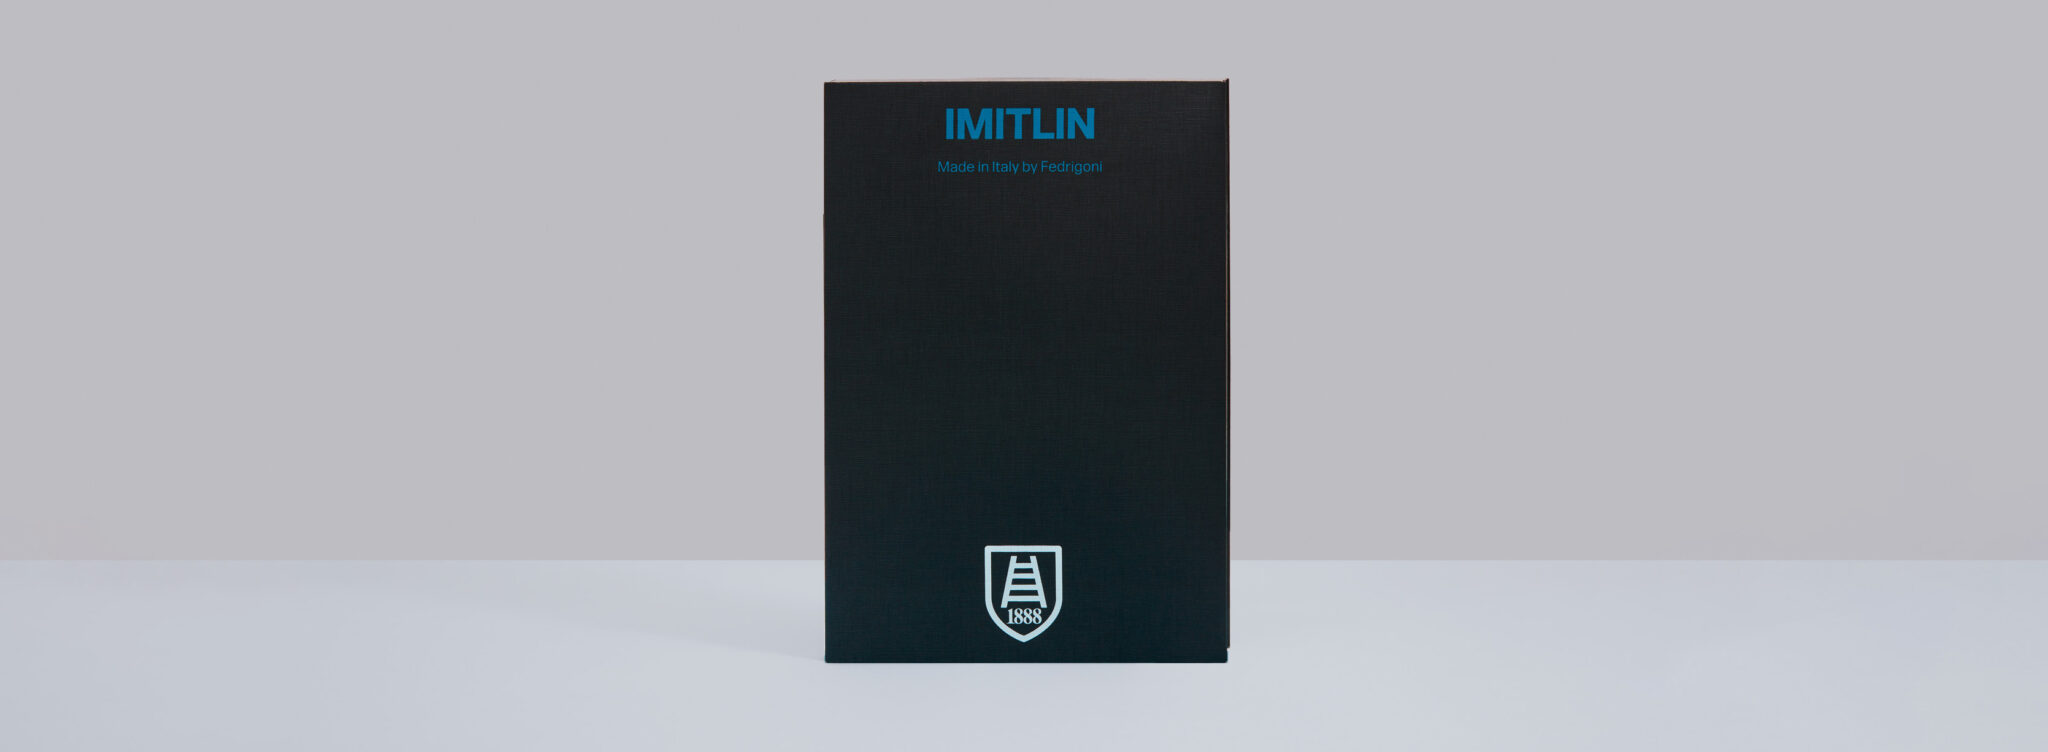 Imitlin